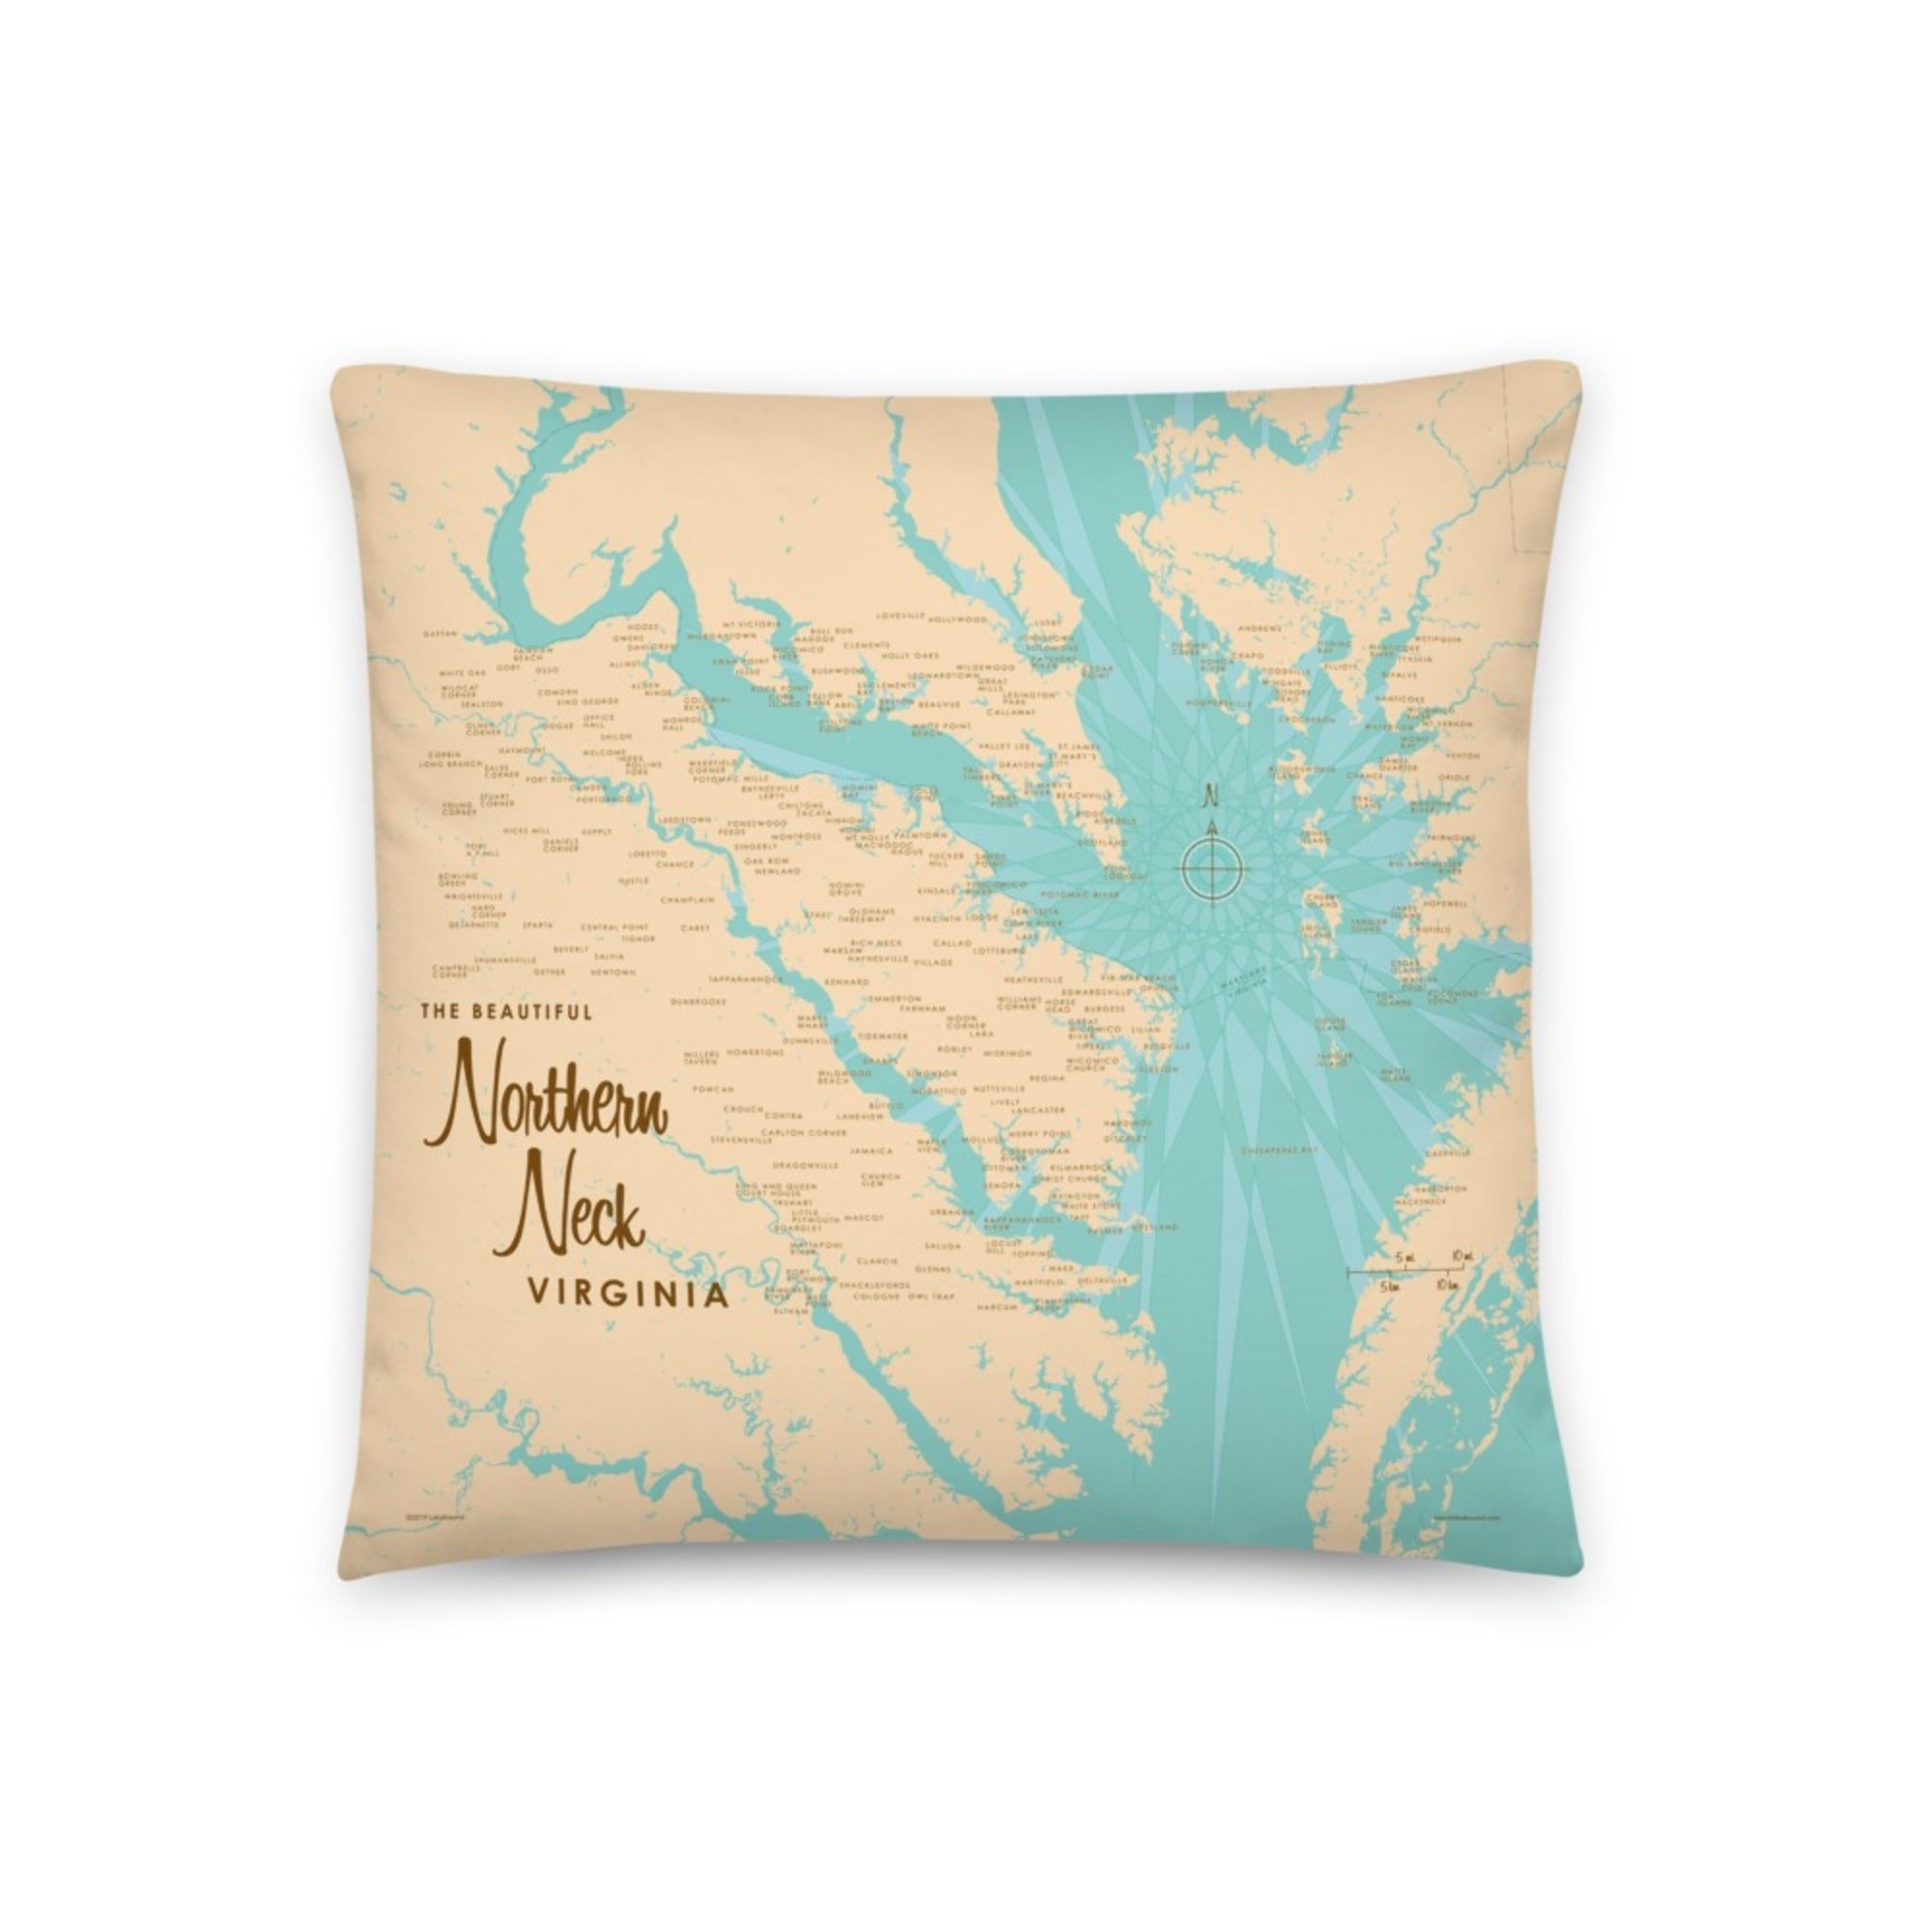 Northern Neck Virginia Pillow